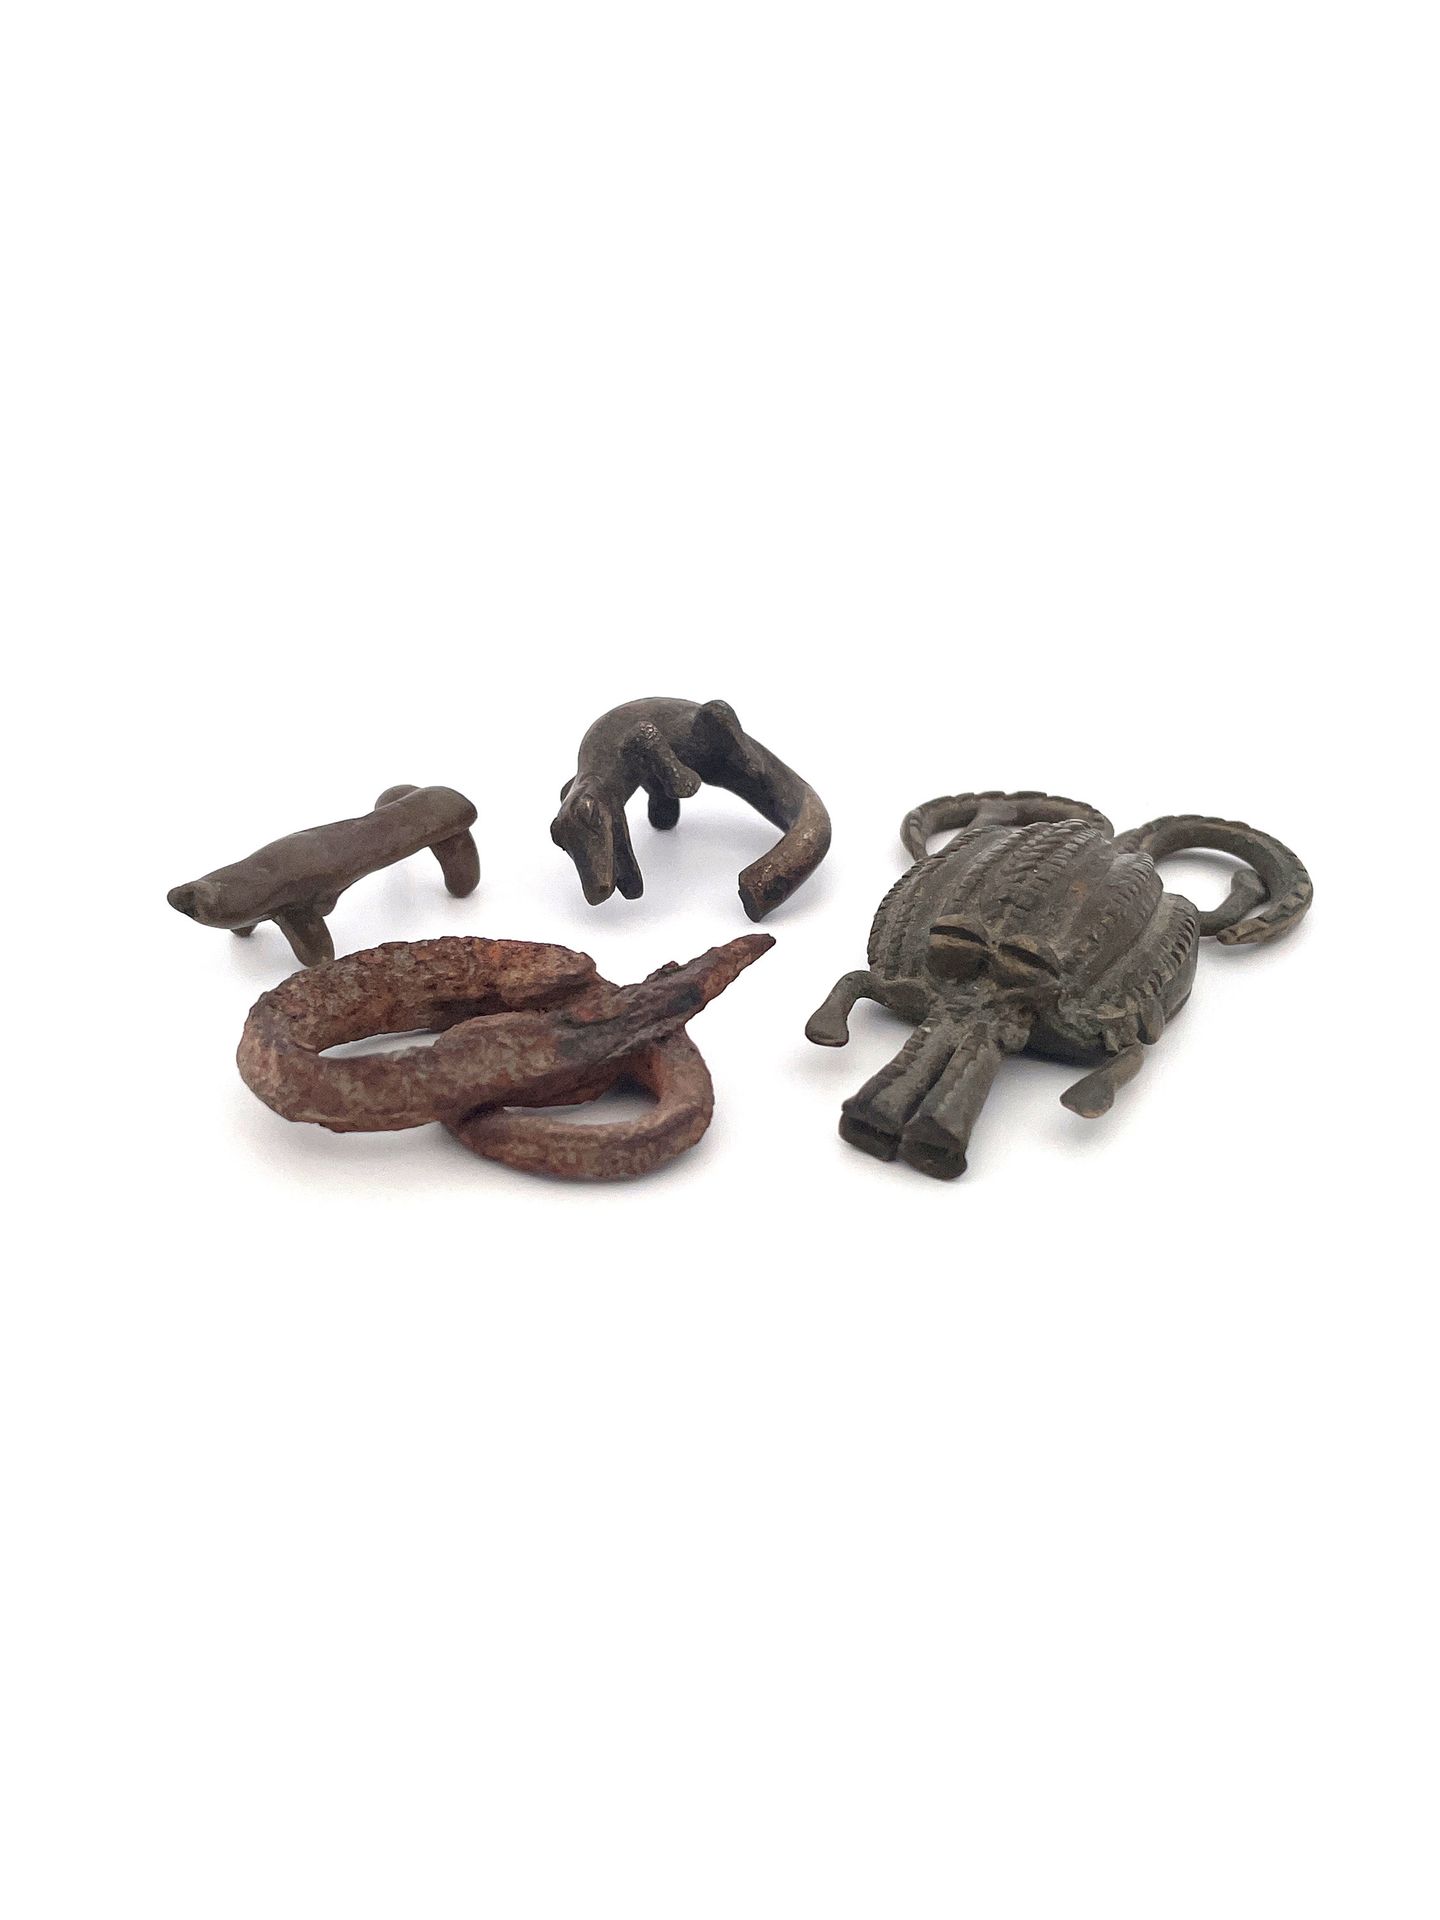 3 Miiature Bronzes and an Iron Snake 3 pequeños bronces y 1 serpiente de hierro
&hellip;